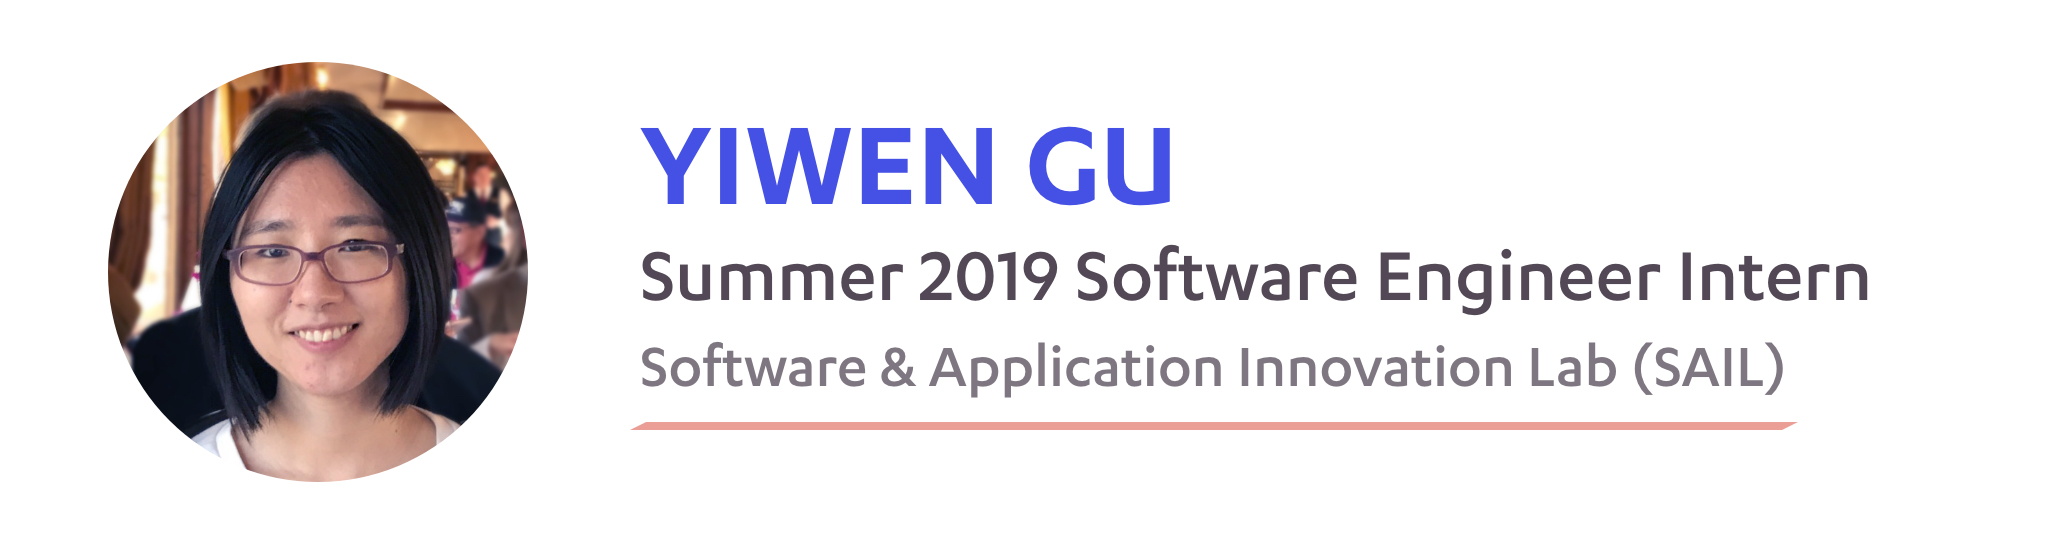 Yiwen Gu, SAIL Summer 2019 Software Engineer Intern